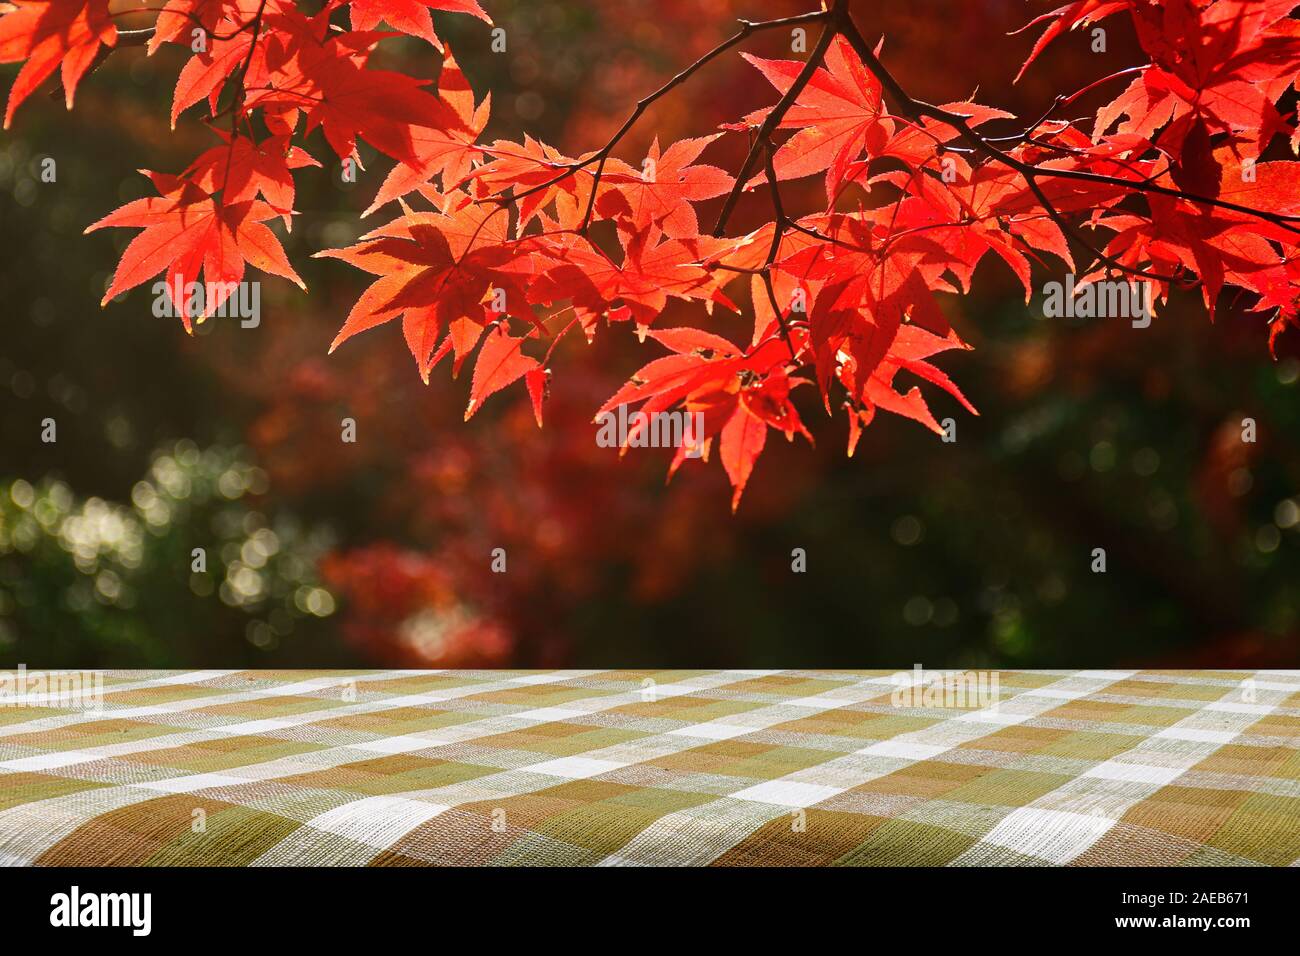 Picnic table and maple Tree Garden in Autumn. Fully red Maple leaves in Autumn. Autumn background with warm autumn sun light. Stock Photo